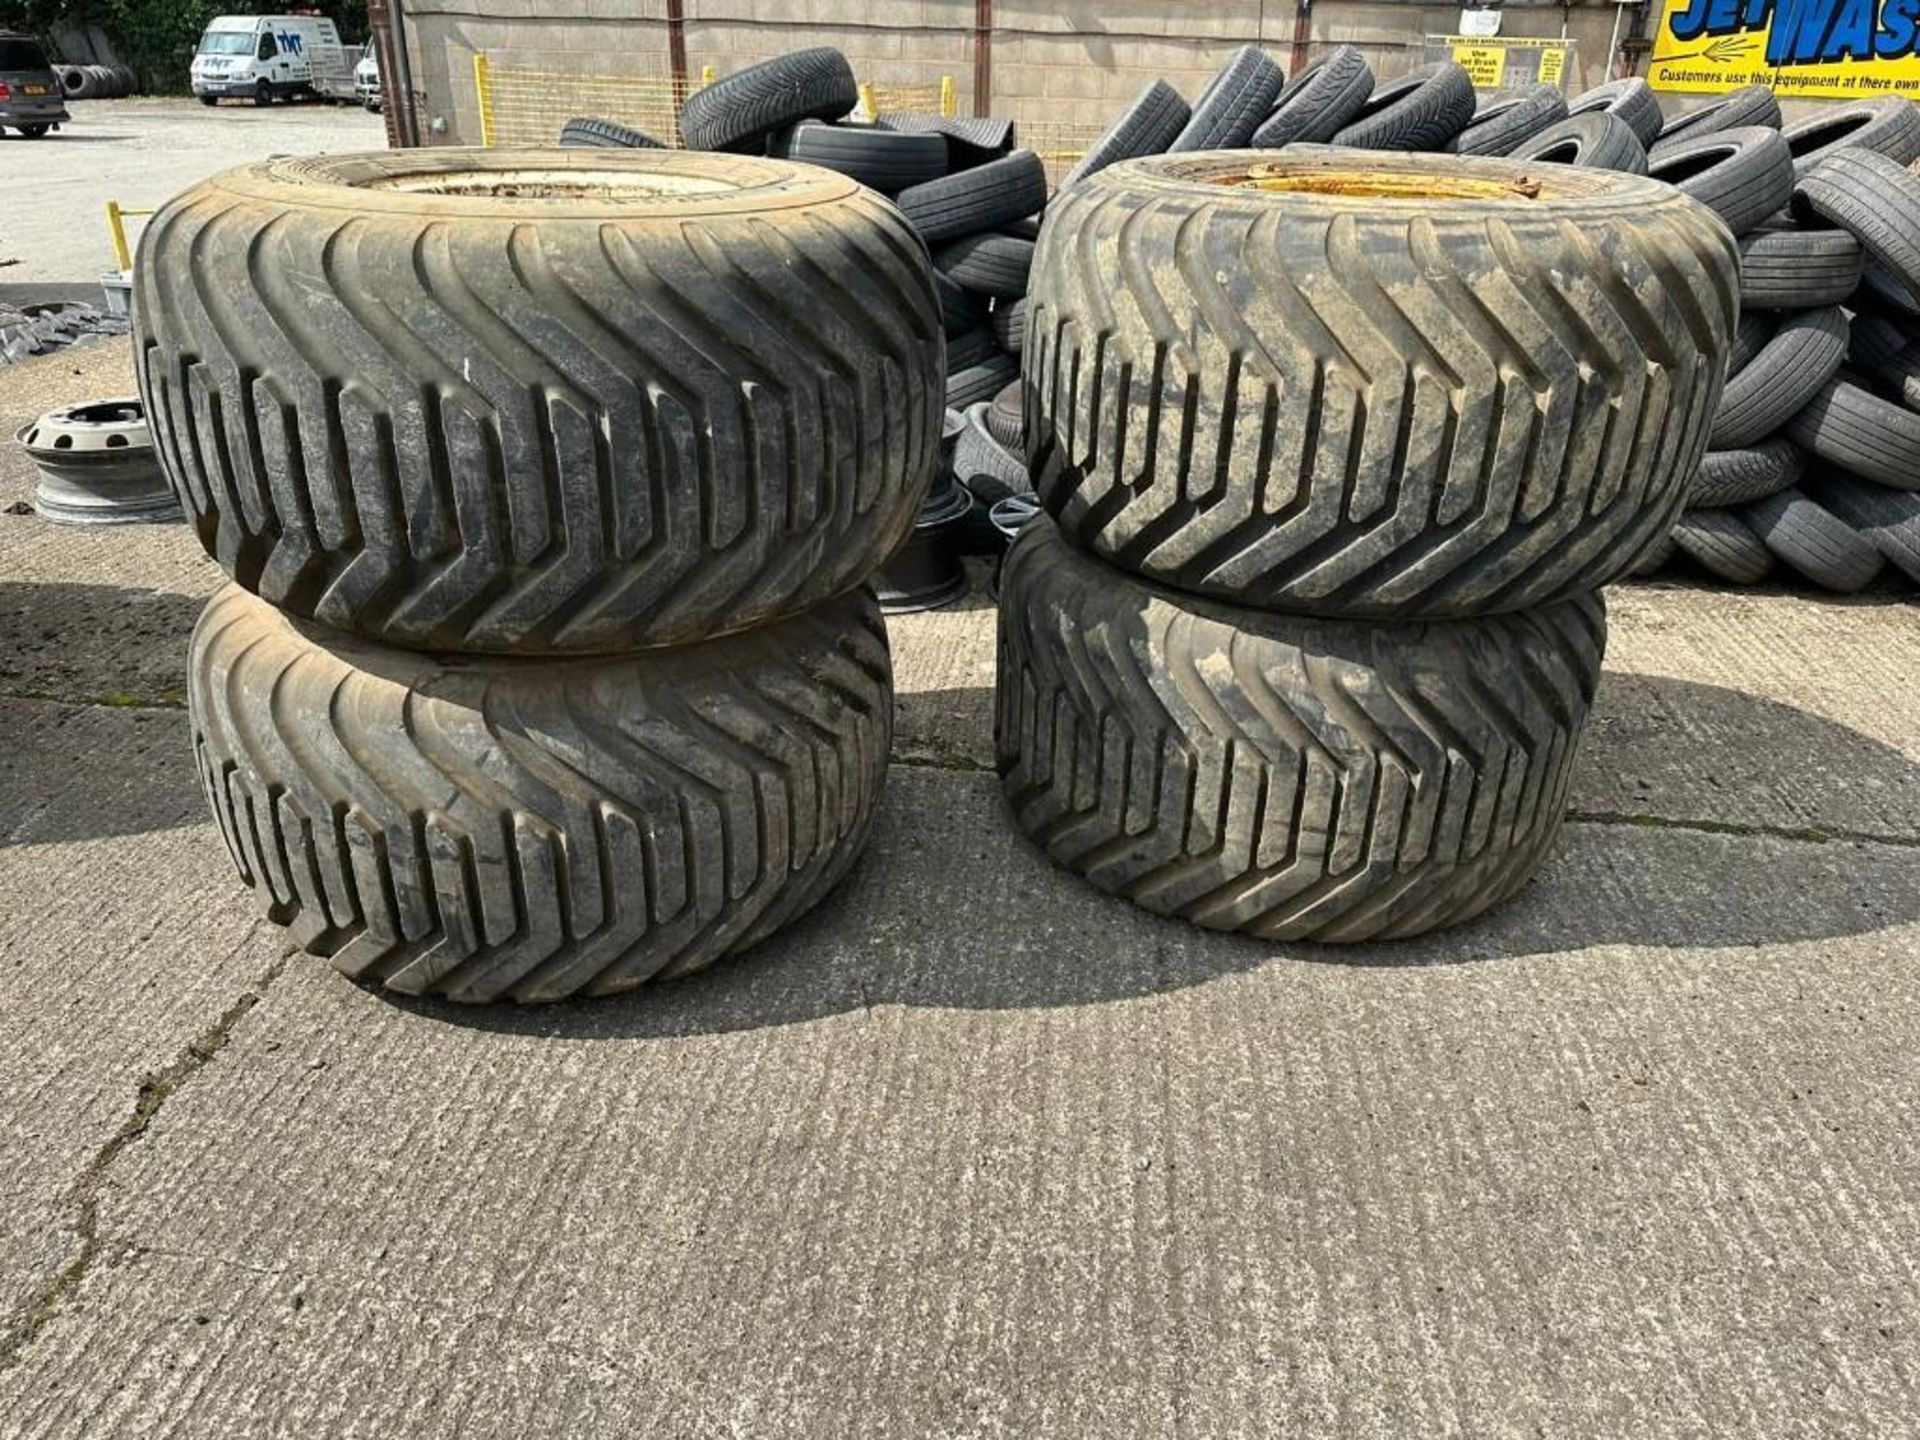 Set of 48X25.00-20 Alliance Tyres on 10 Stud Wheels - (Shropshire) - Image 2 of 2